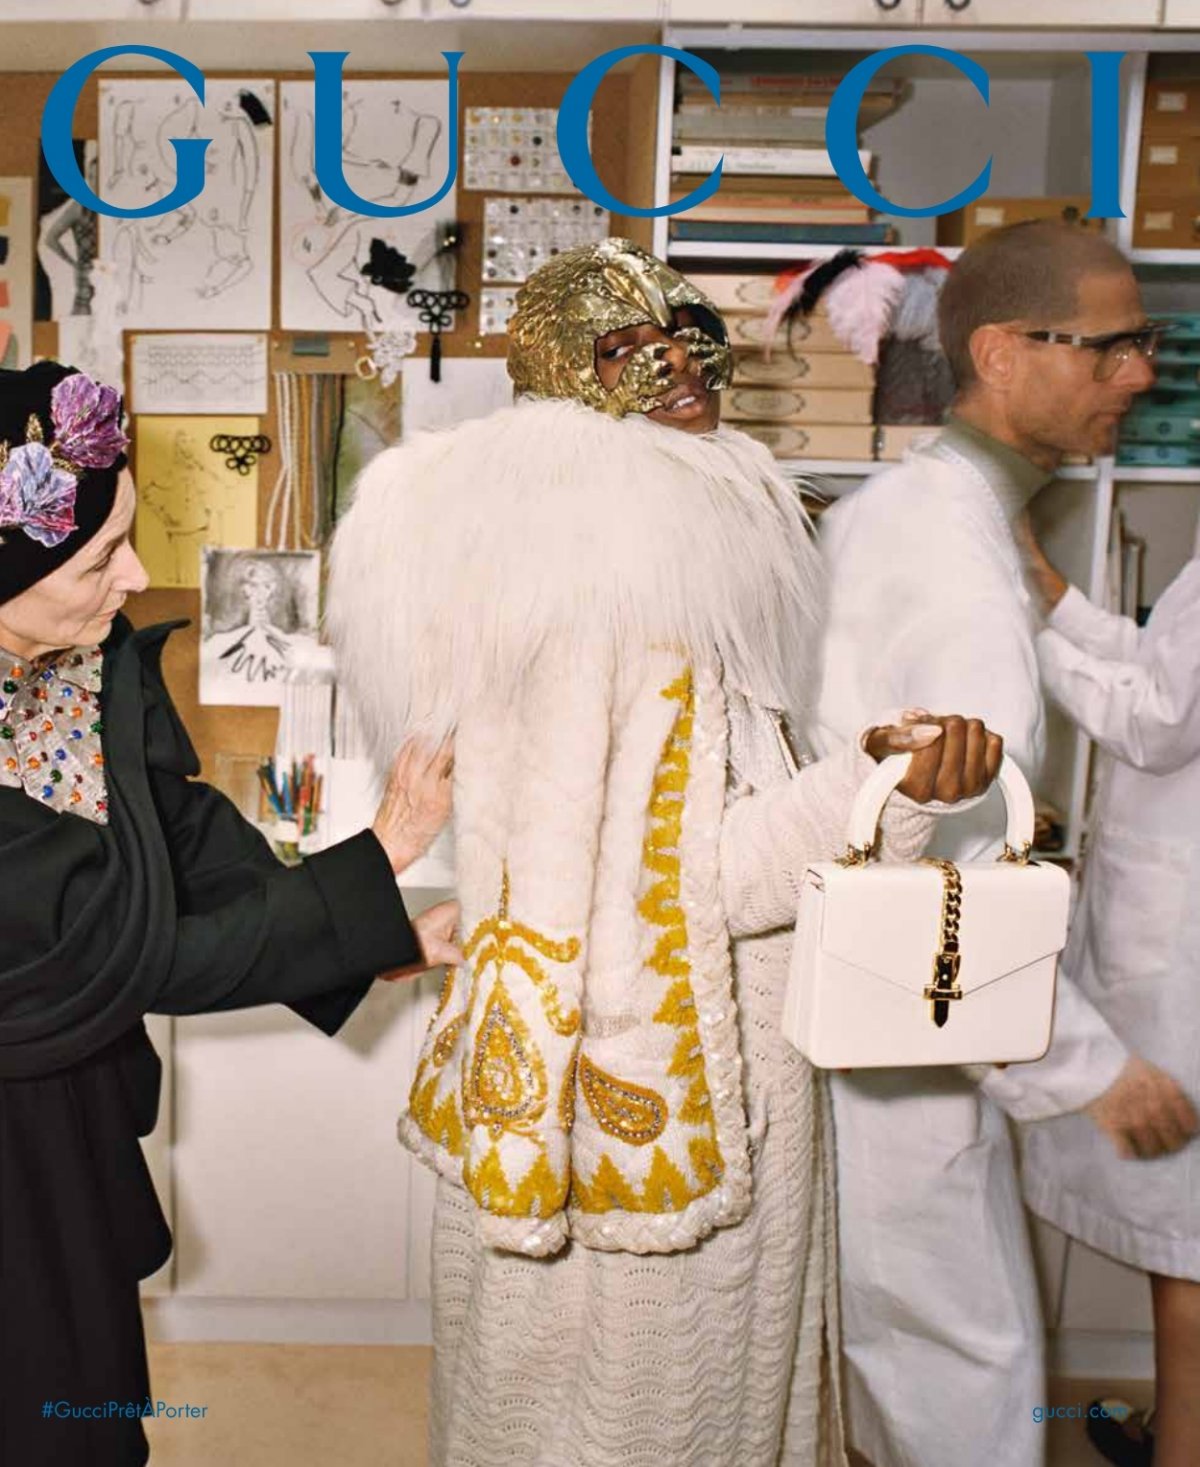 Jeff Koons brings fine art to the masses with $4K handbags